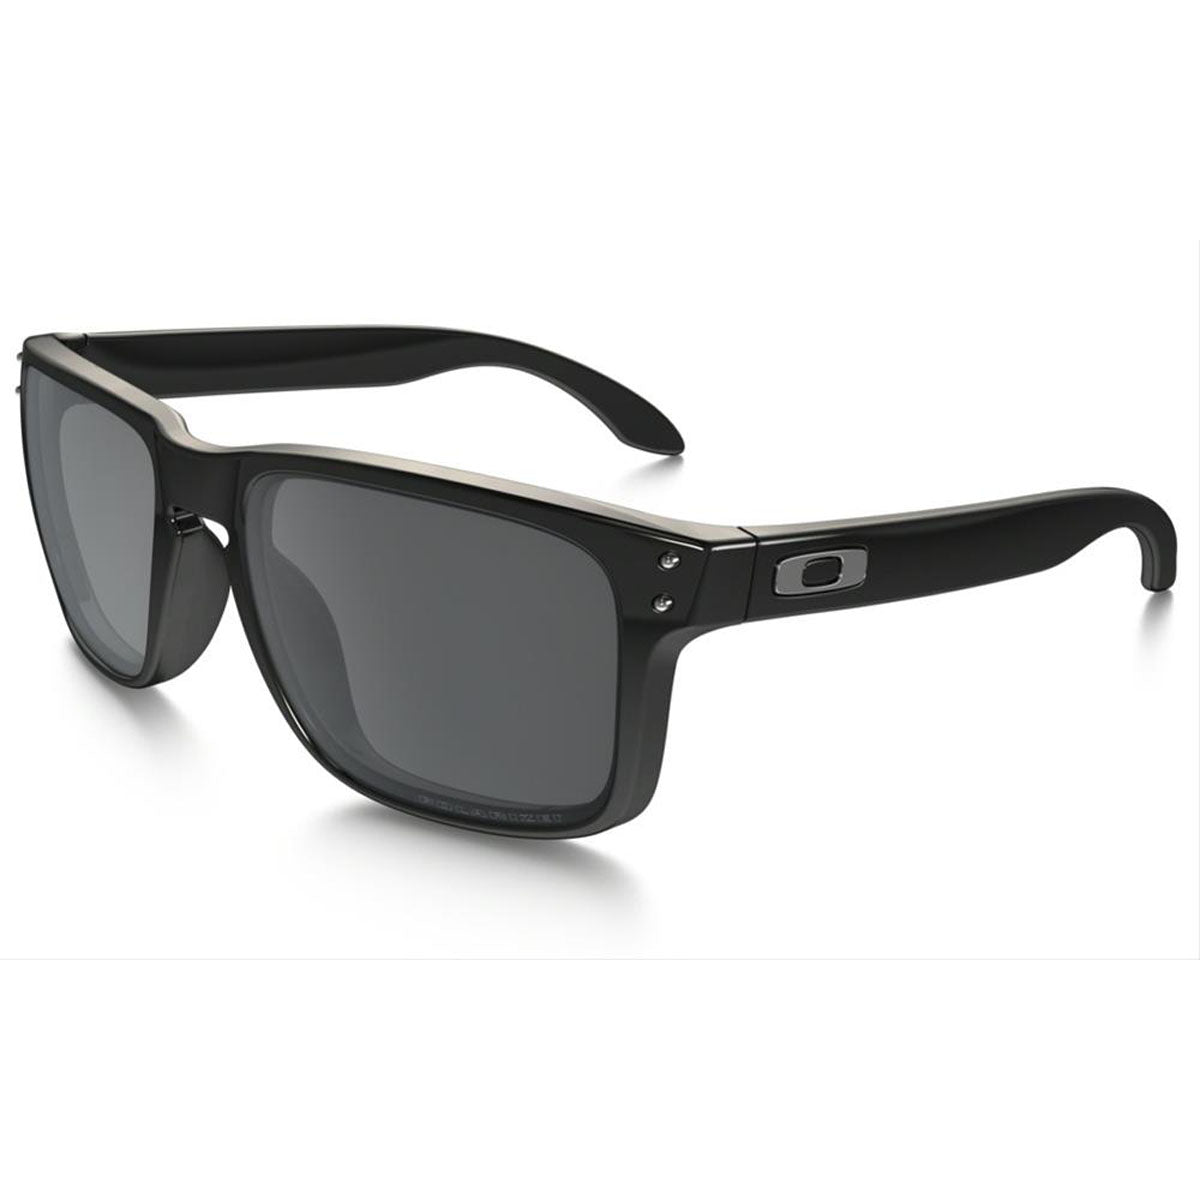 Oakley Holbrook Asian Fit Sunglasses - Polished Black / Black Iridium Polarized Lens - OO9244-02